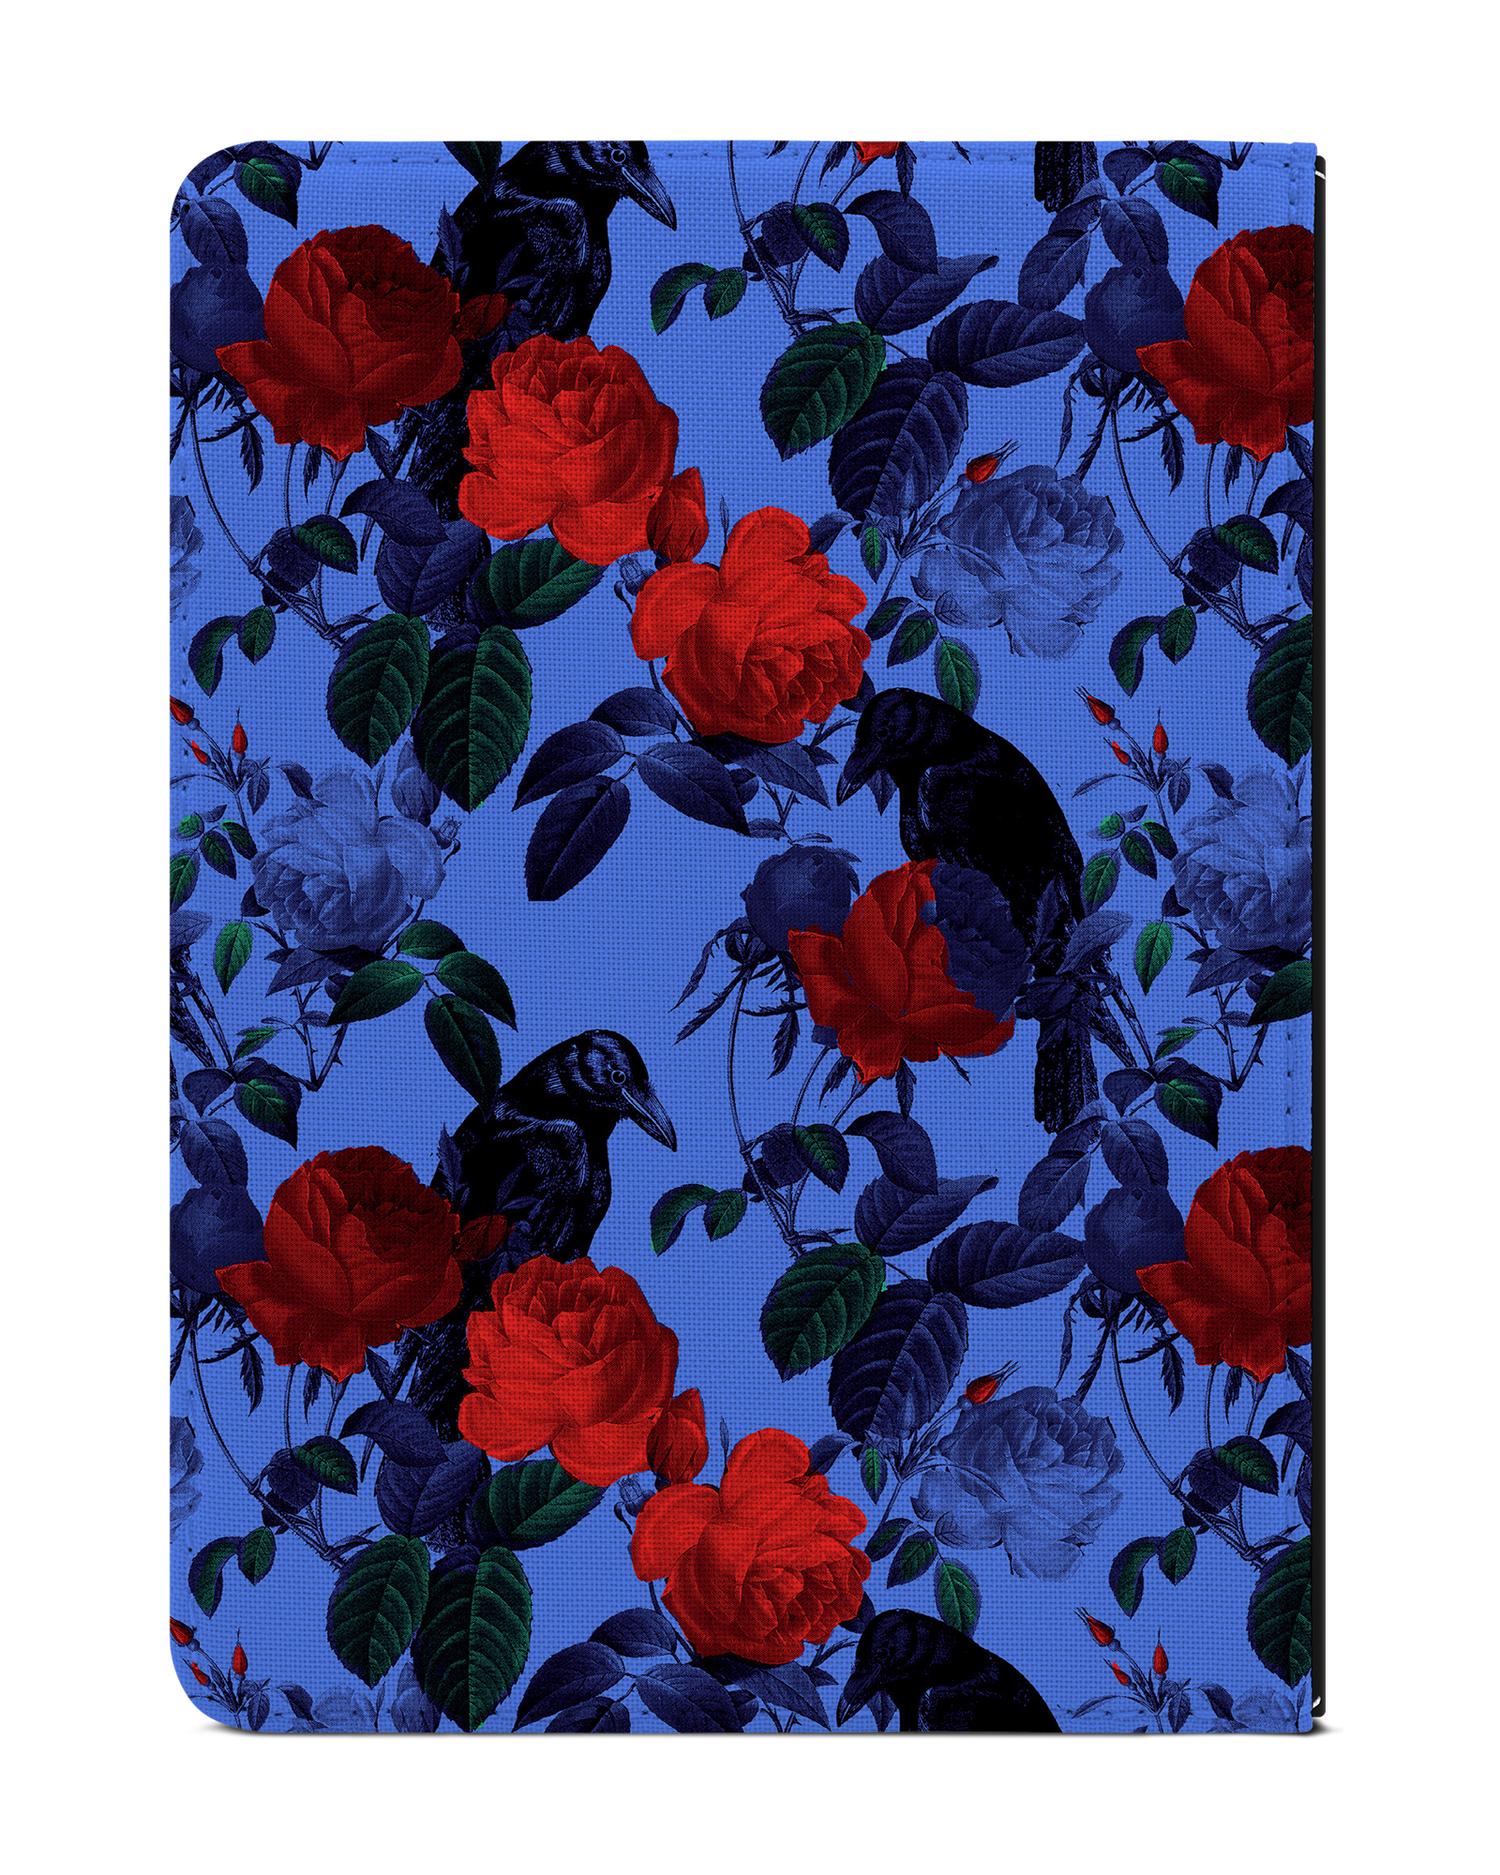 Roses And Ravens eBook Reader Hülle für tolino vision 1 bis 4 HD: Rückseite